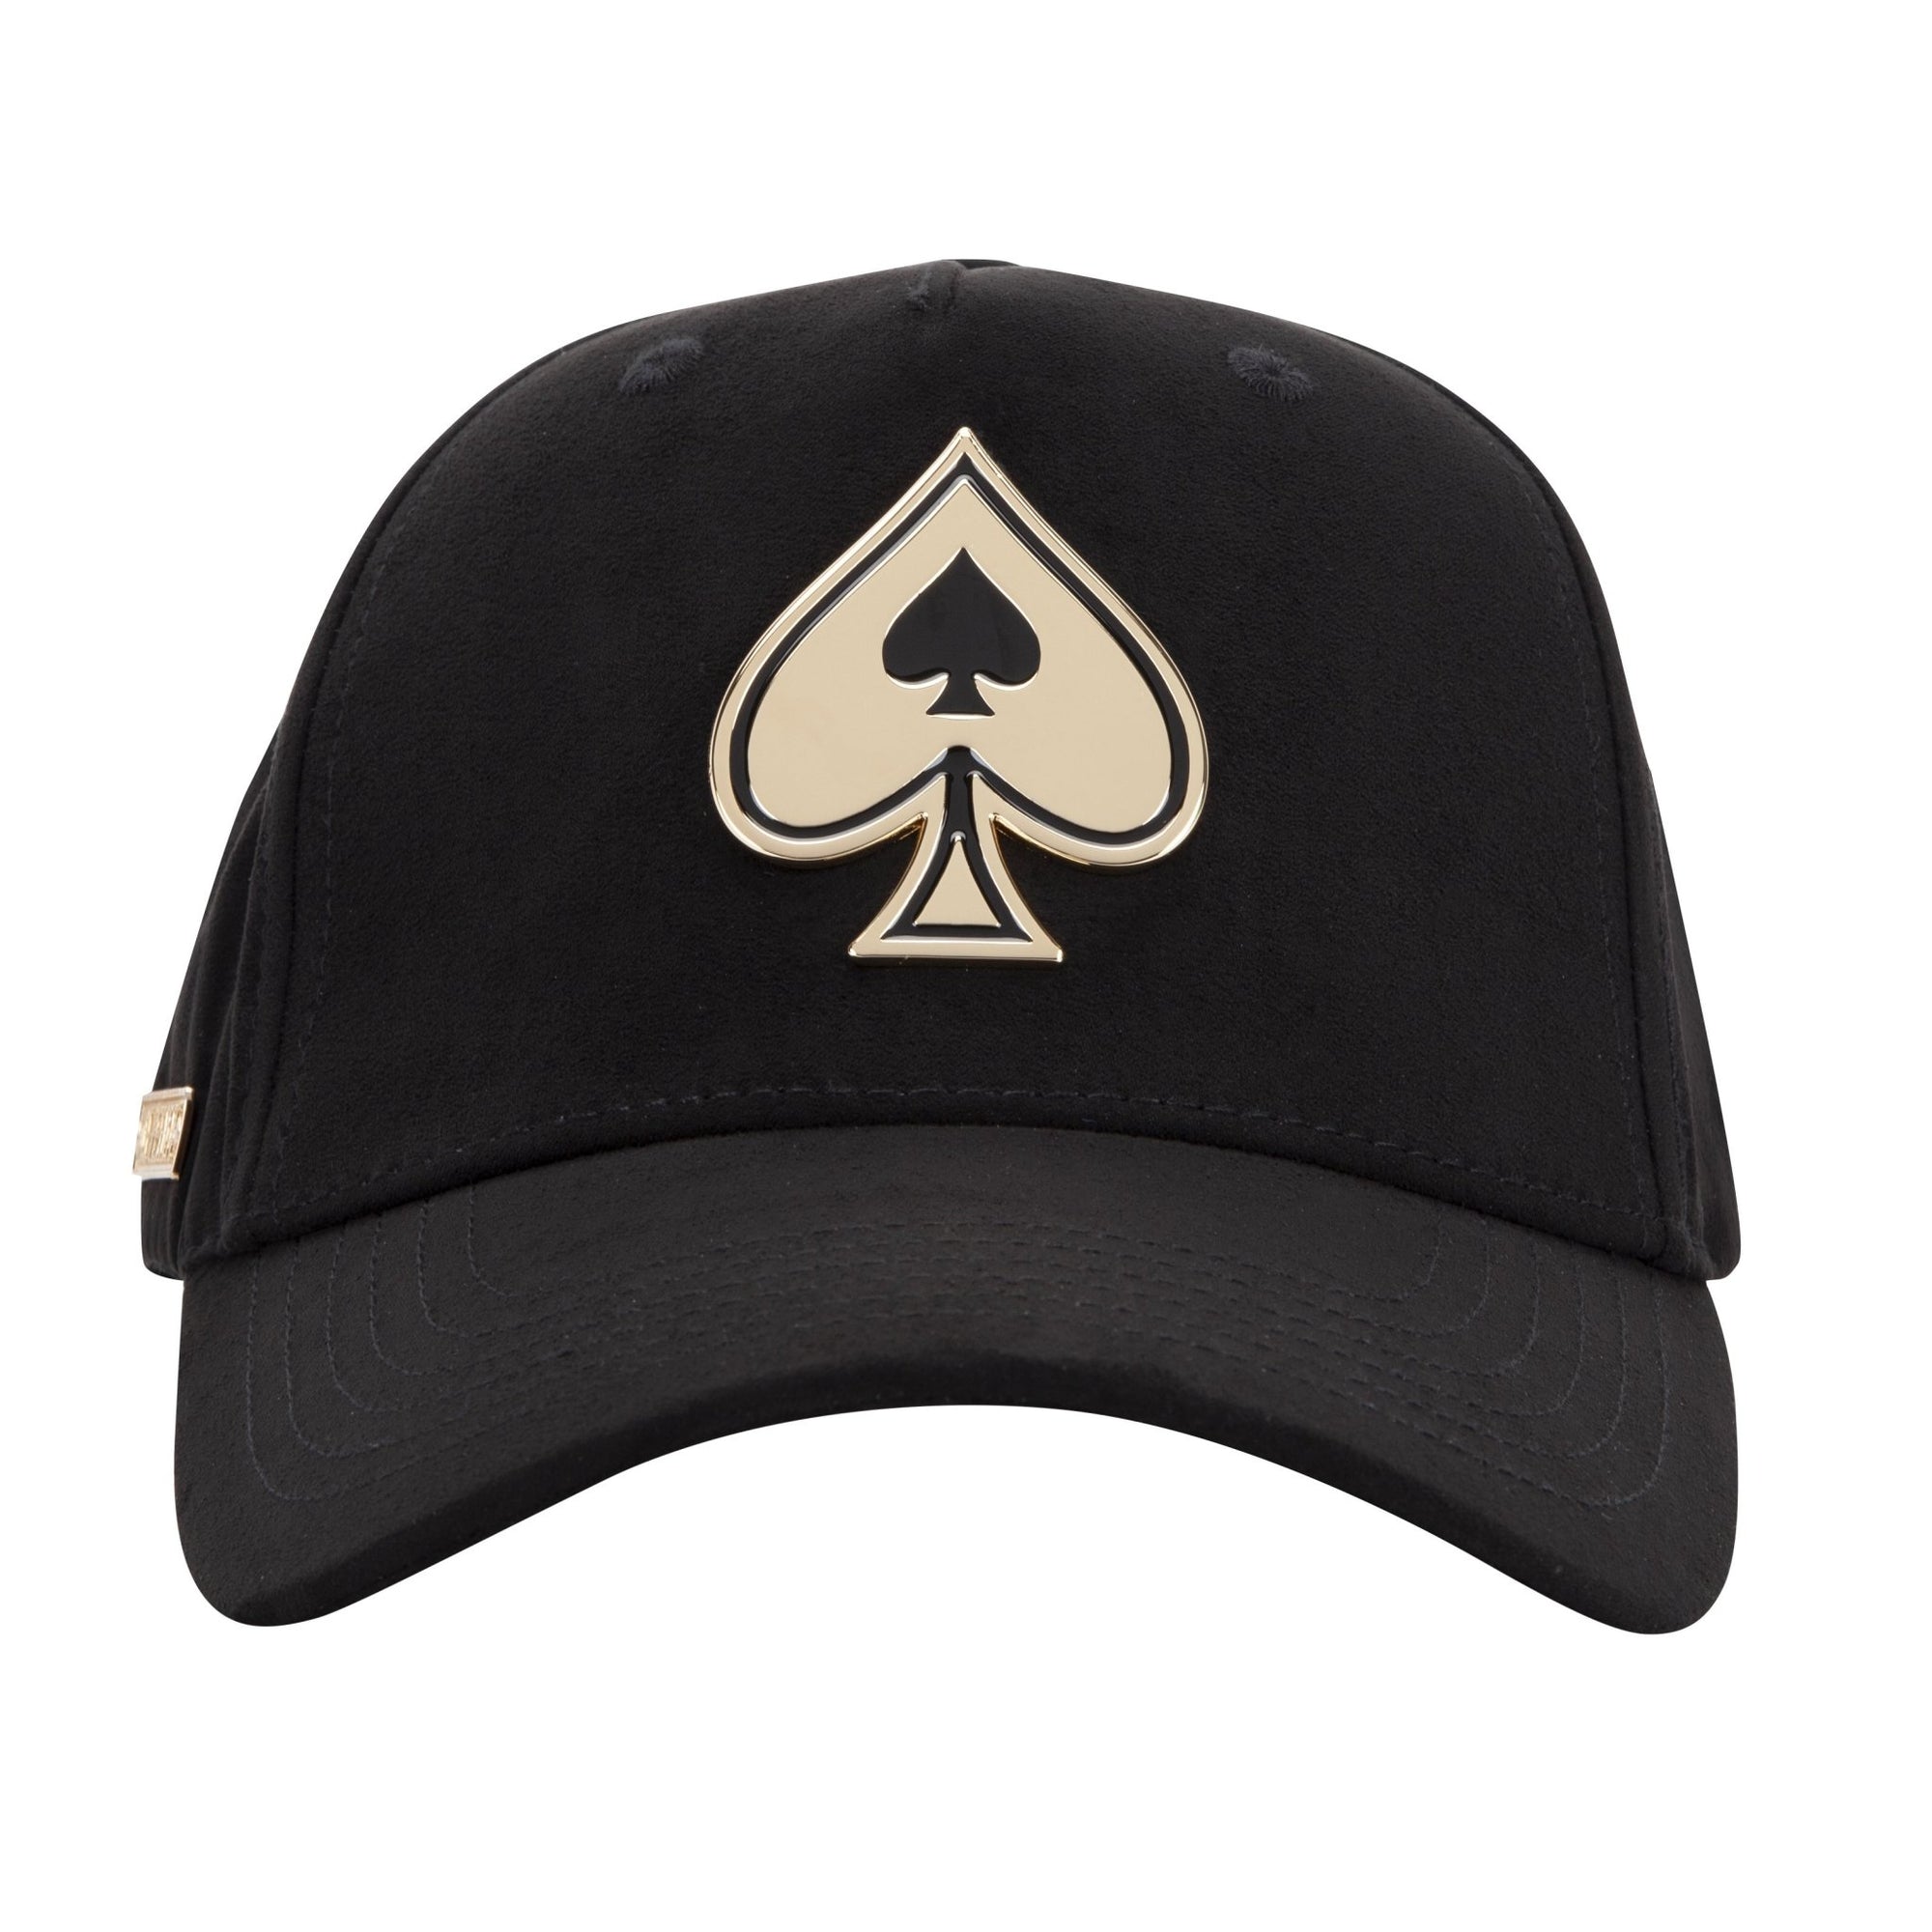 Metal Gold Spade Baseball Cap (Limited Edition) - ACE VESTITI